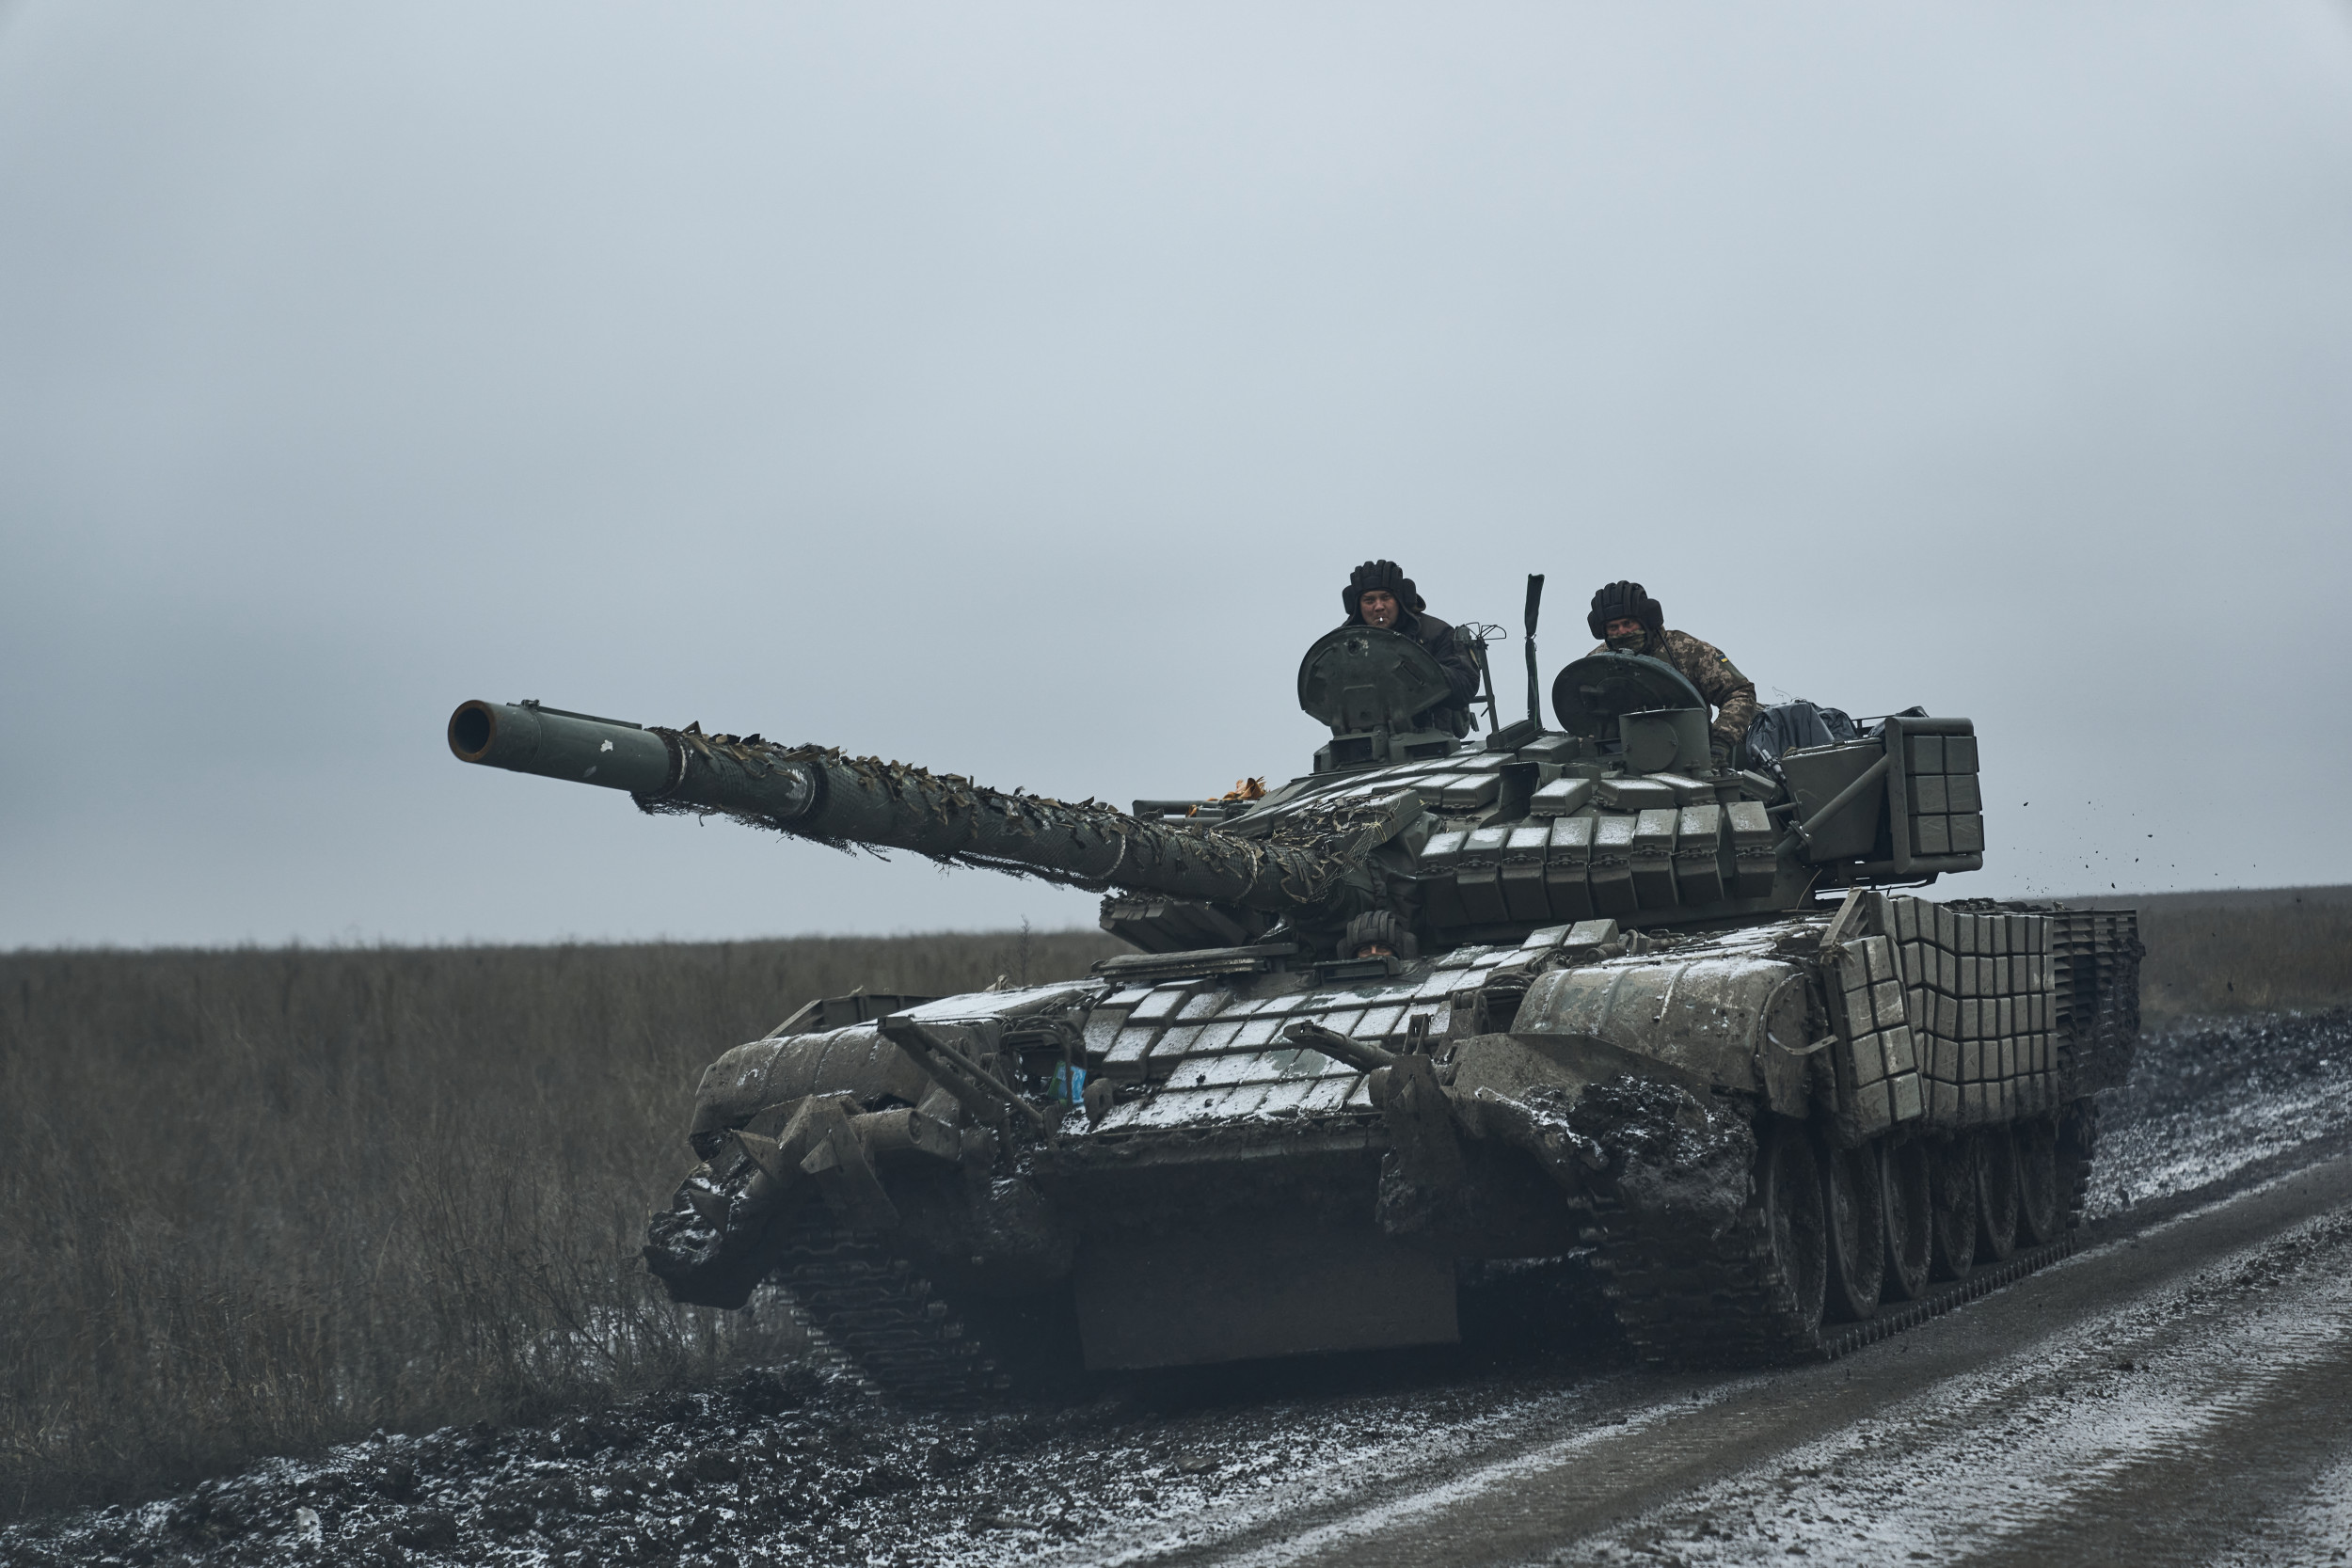 russia loses 400 tanks, struggles to gain ground in ukraine: uk